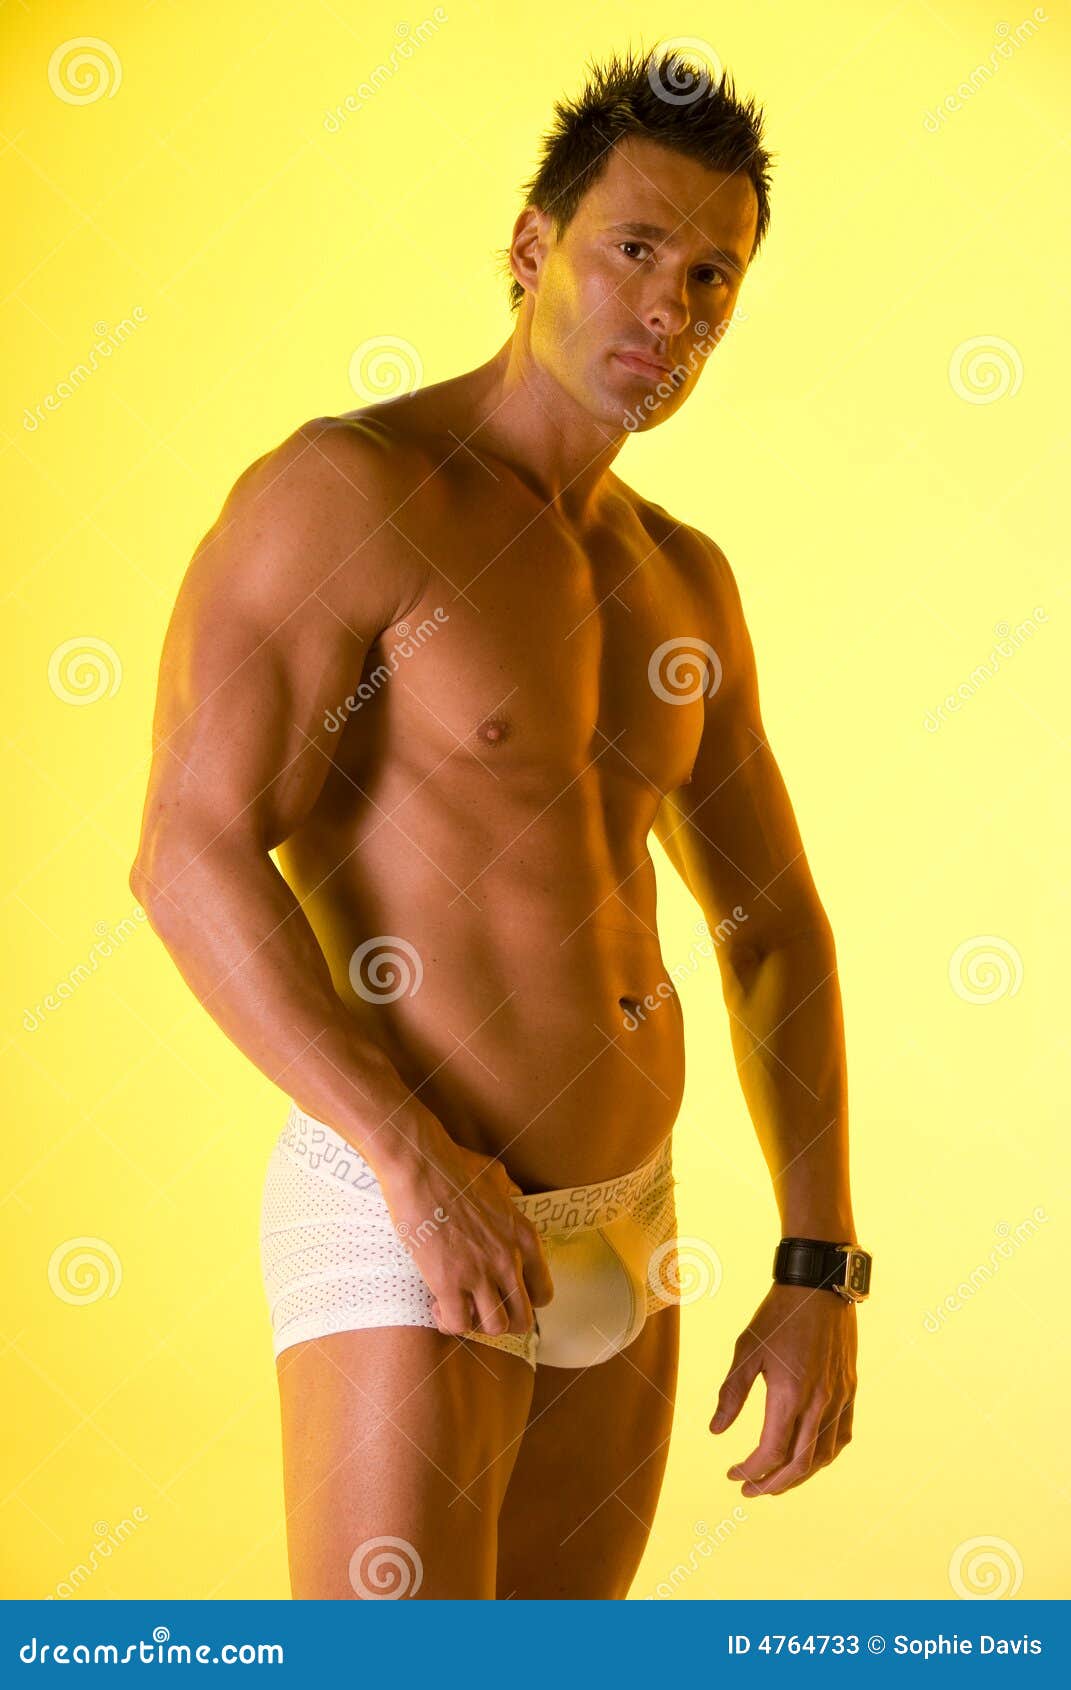 365 Male Model Wearing Underwear Stock Photos - Free & Royalty